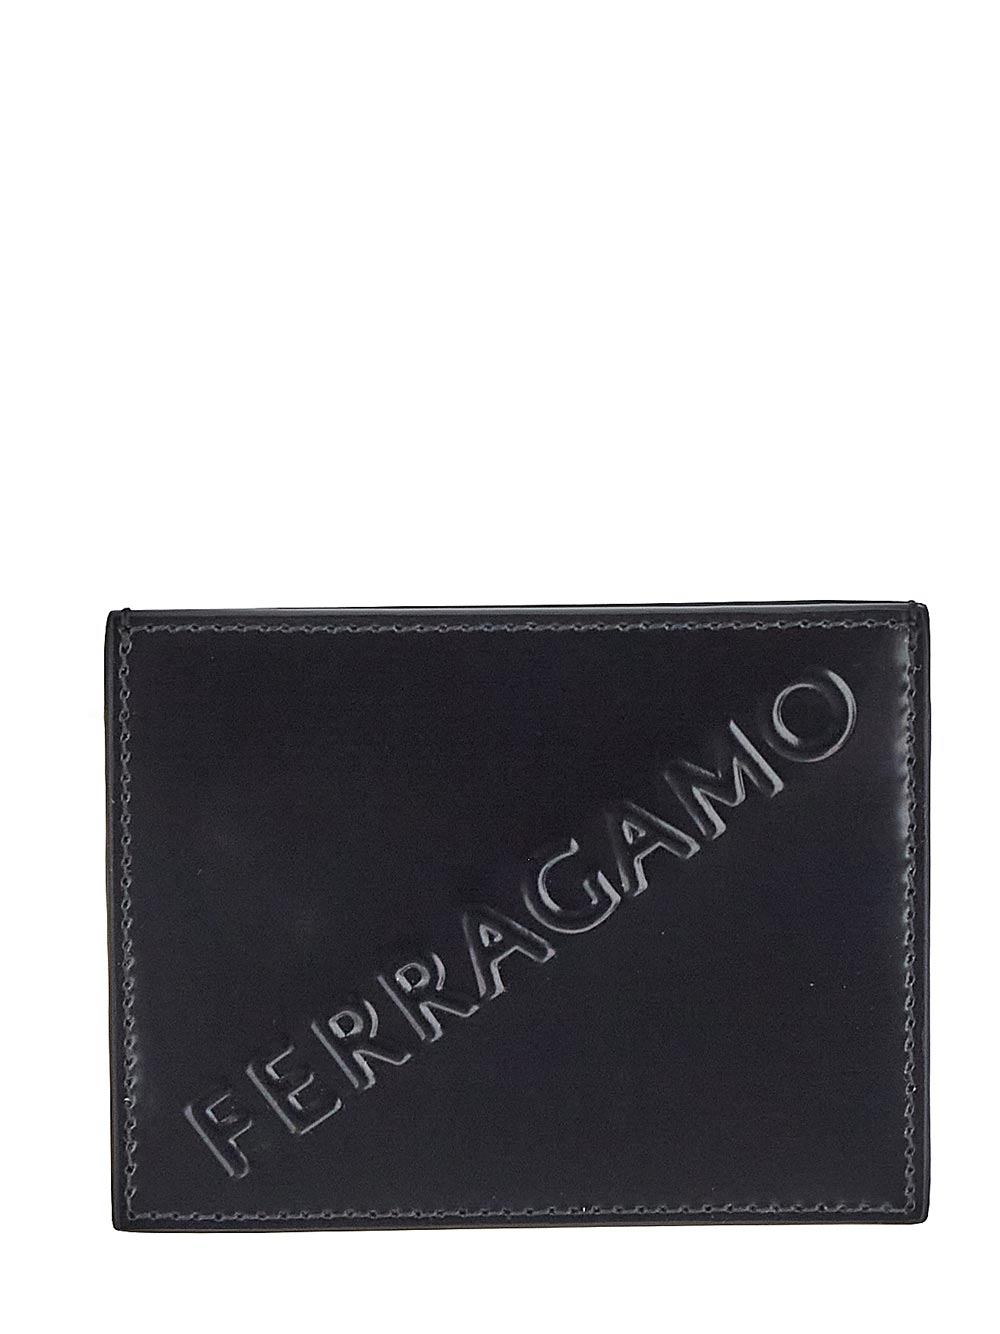 FERRAGAMO Man Card Holder BLACK